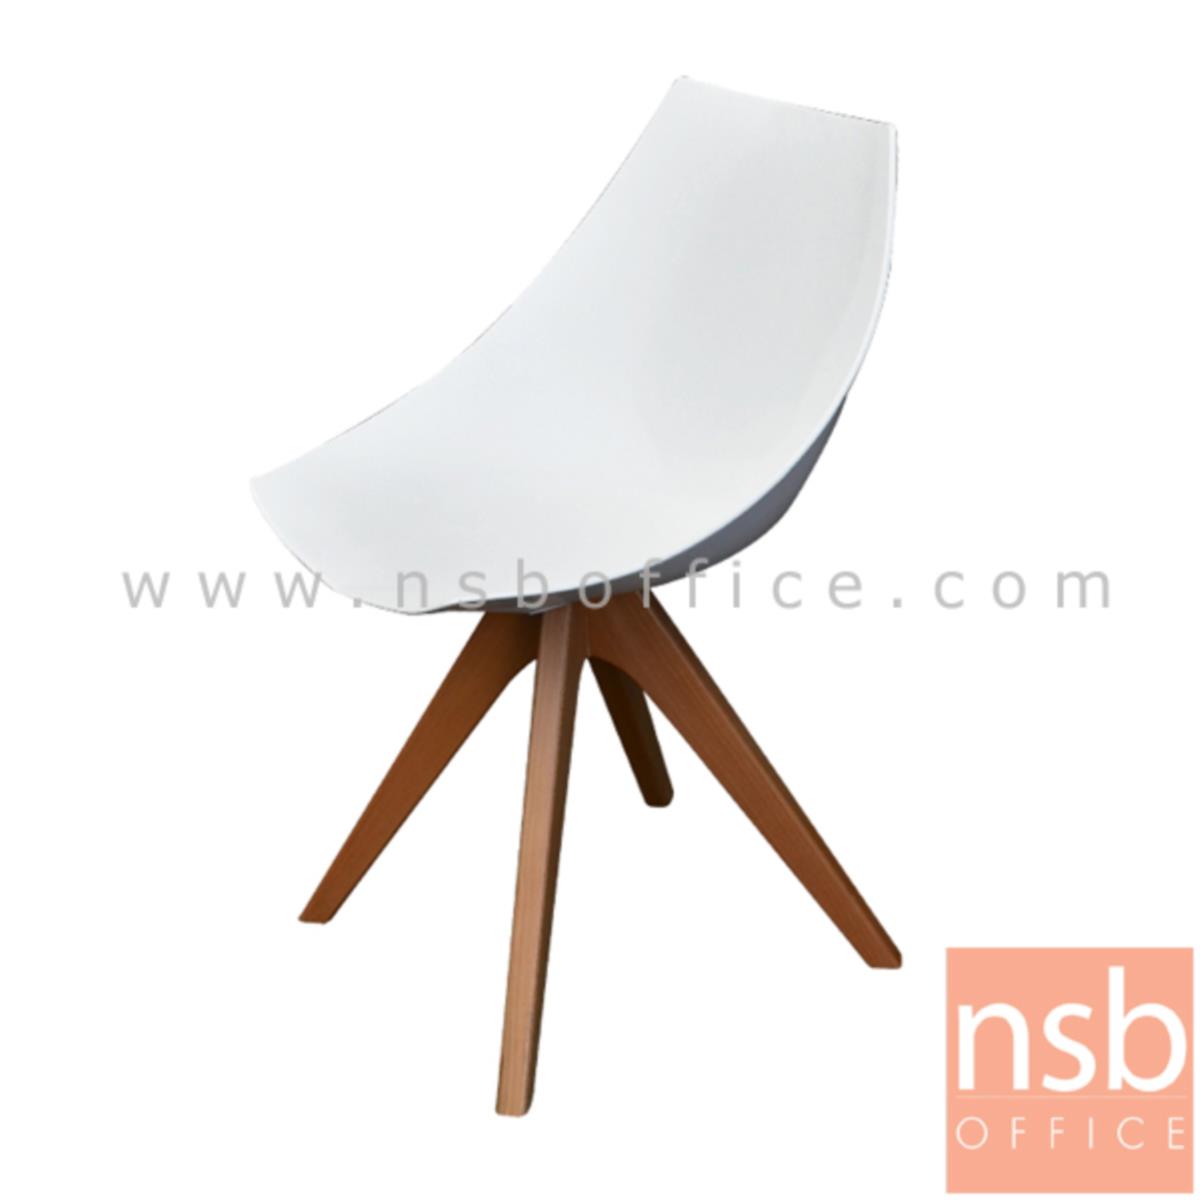 B29A163:เก้าอี้โมเดิร์นโพลี่ รุ่น PN92167 ขนาด 50W cm. โครงขาไม้